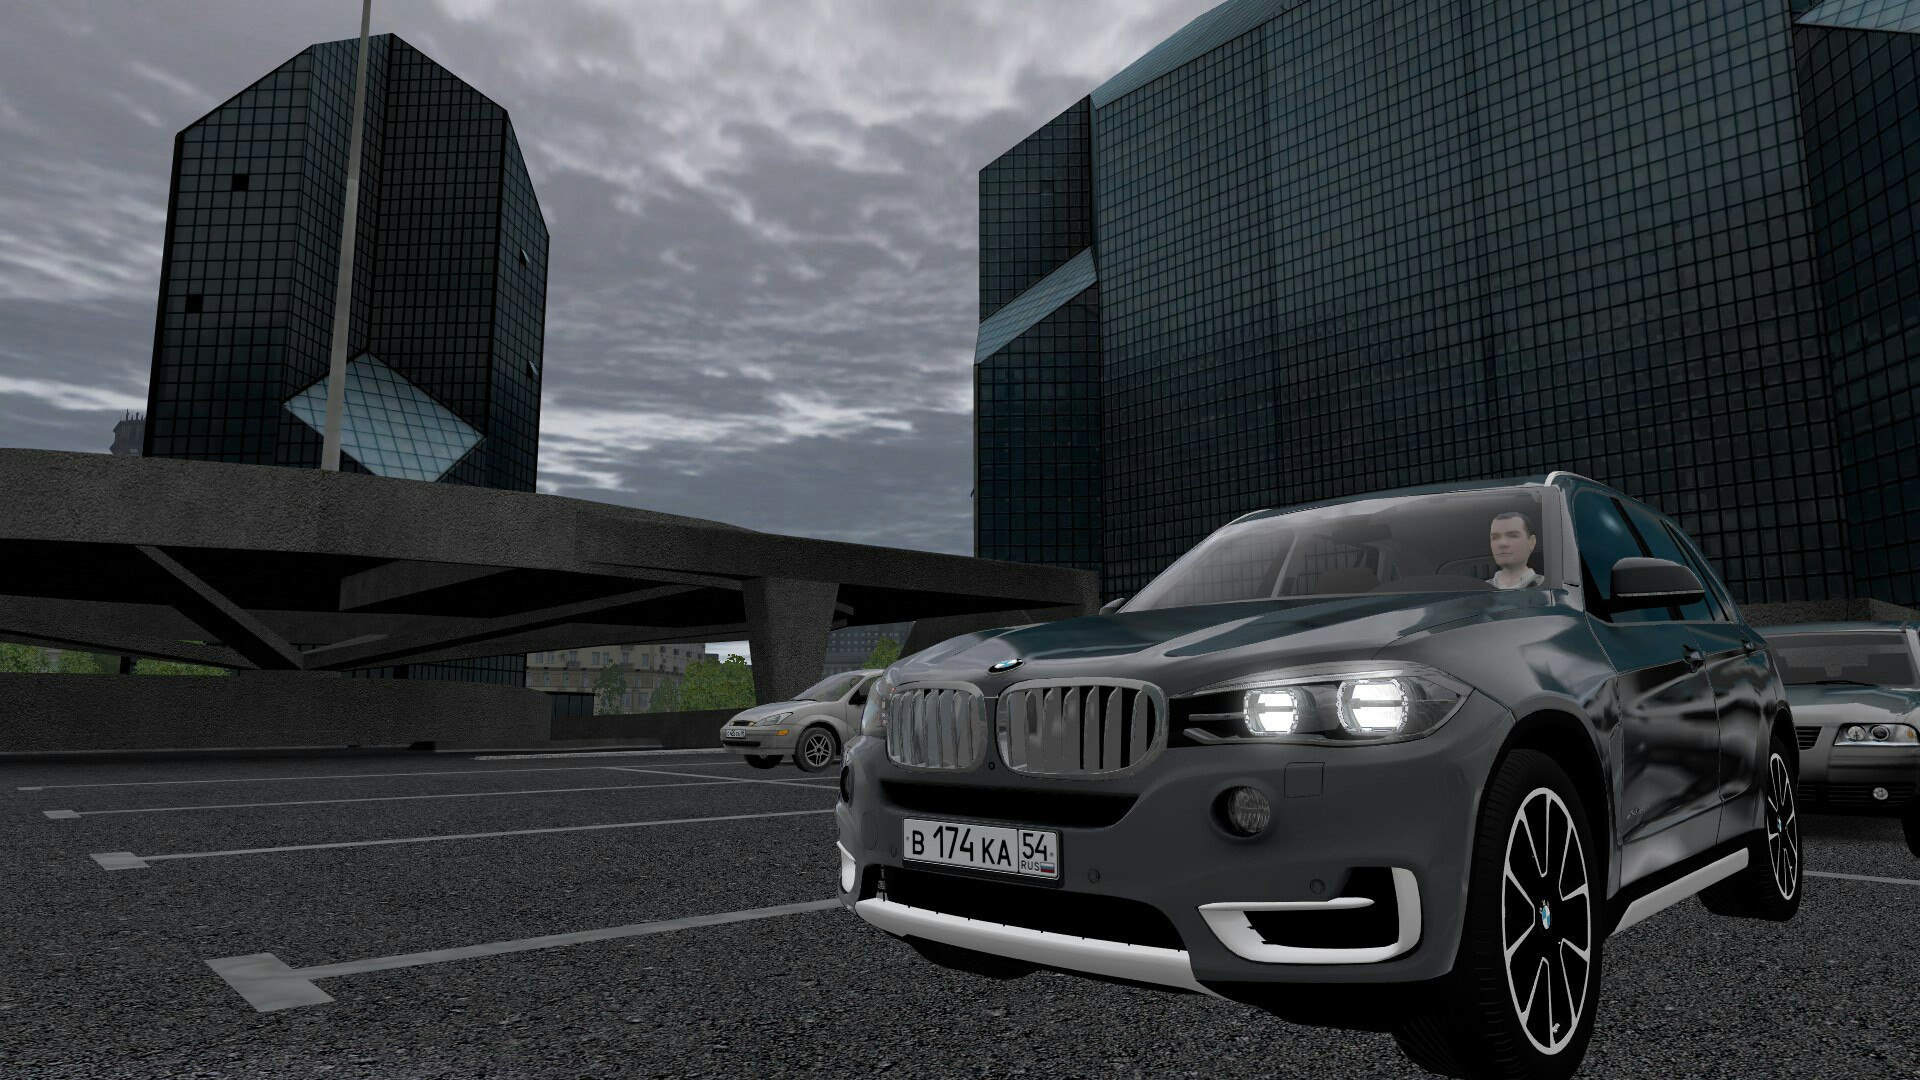 Bmw x5 beamng. БМВ х5 City car Driving. BMW x5 CCD. БМВ х5 Сити кар драйвинг.